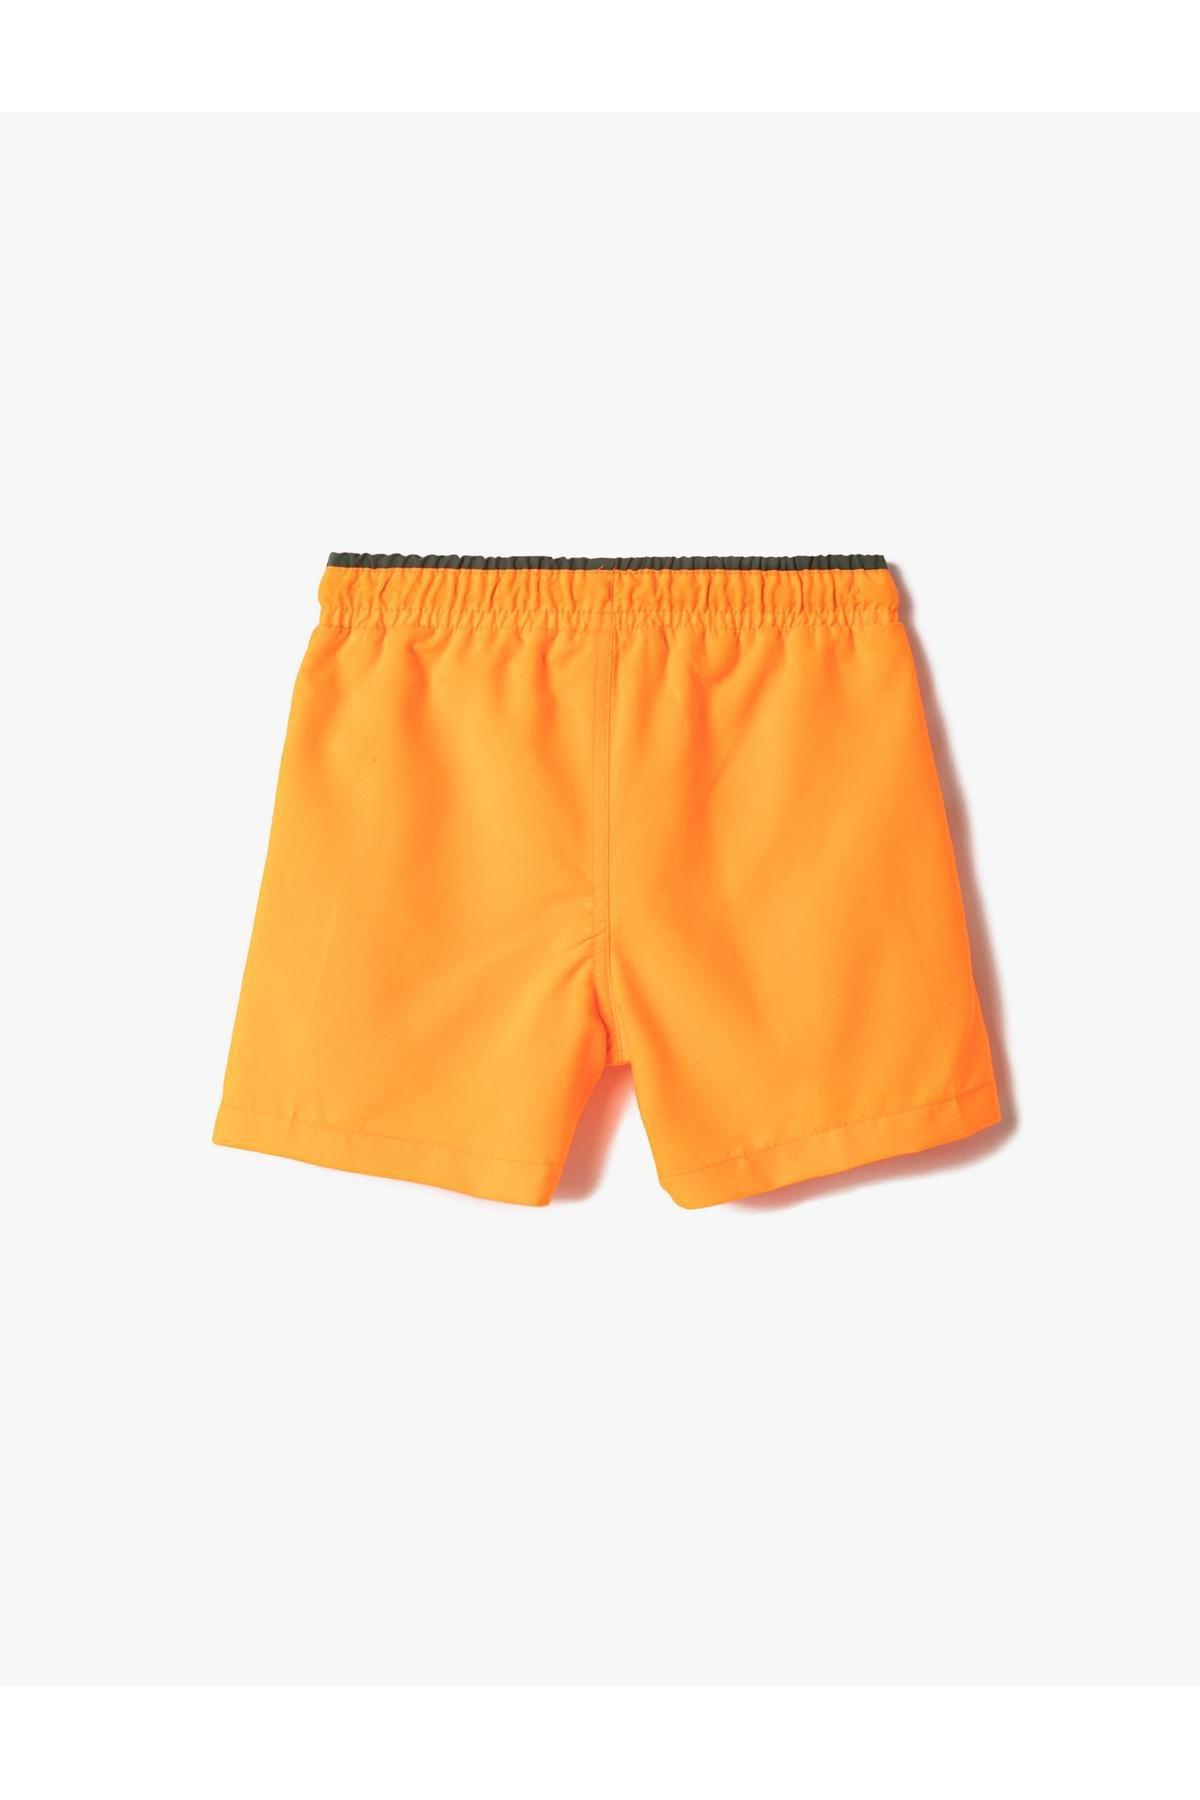 Koton - Orange Tie Waist Printed Swimsuit, Kids Boys